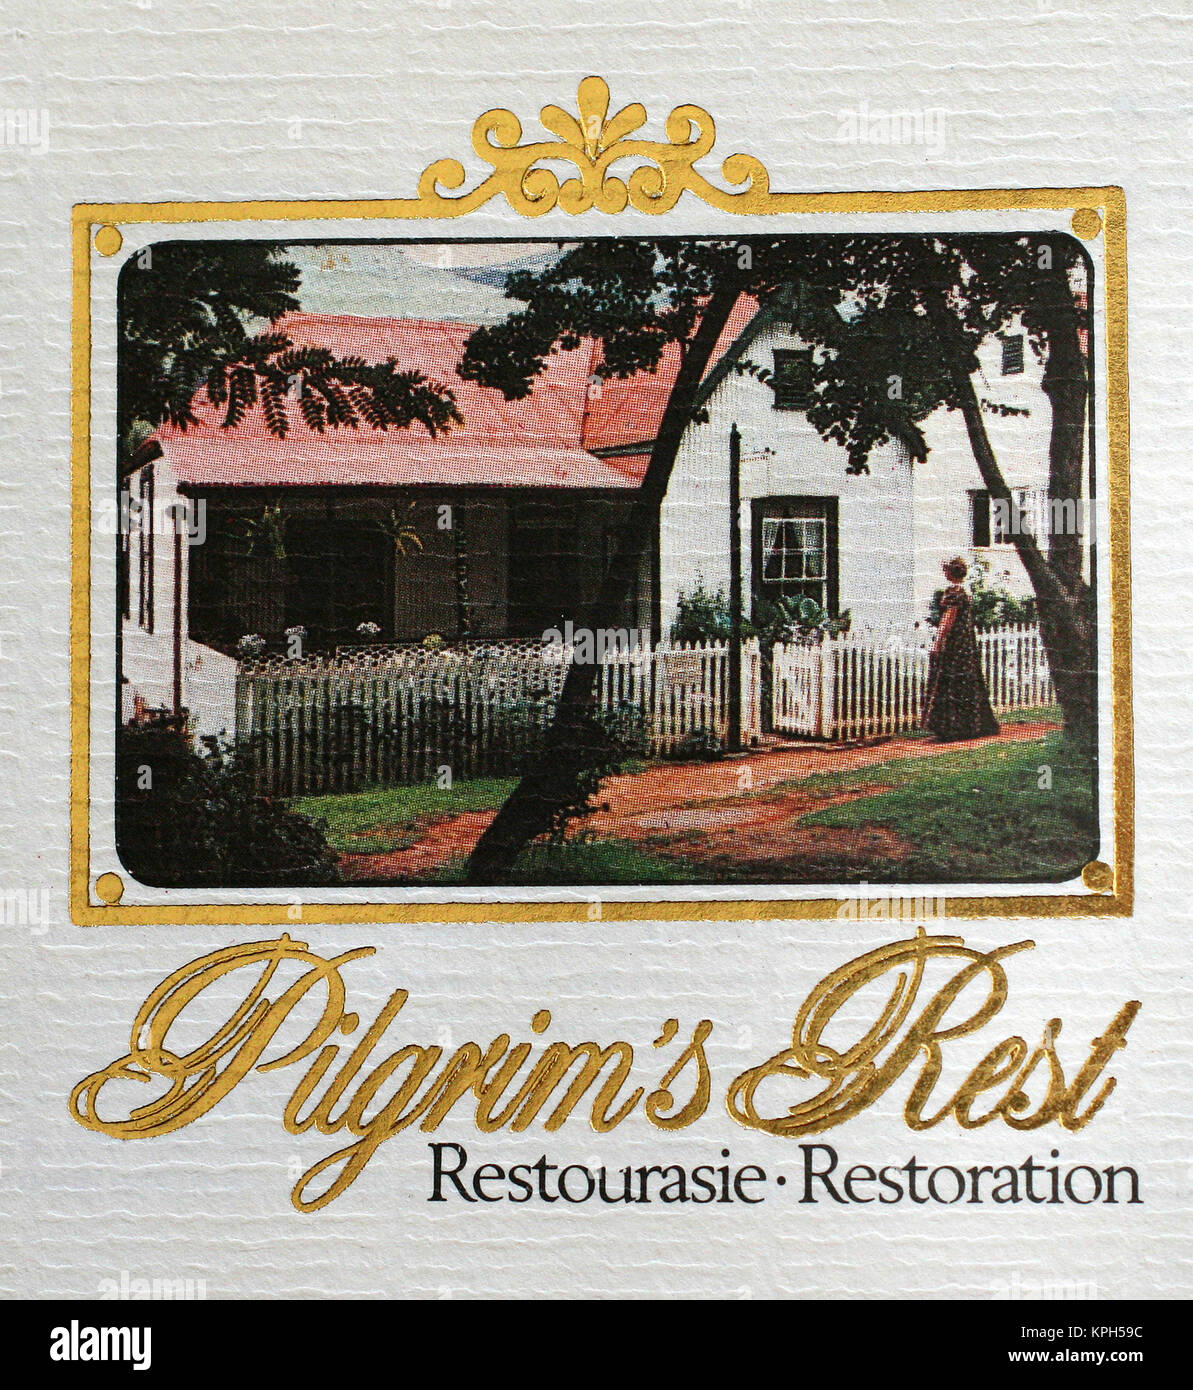 Restoration of Pilgrim's Rest 1985 postage stamp, Gauteng Province, South Africa. Stock Photo